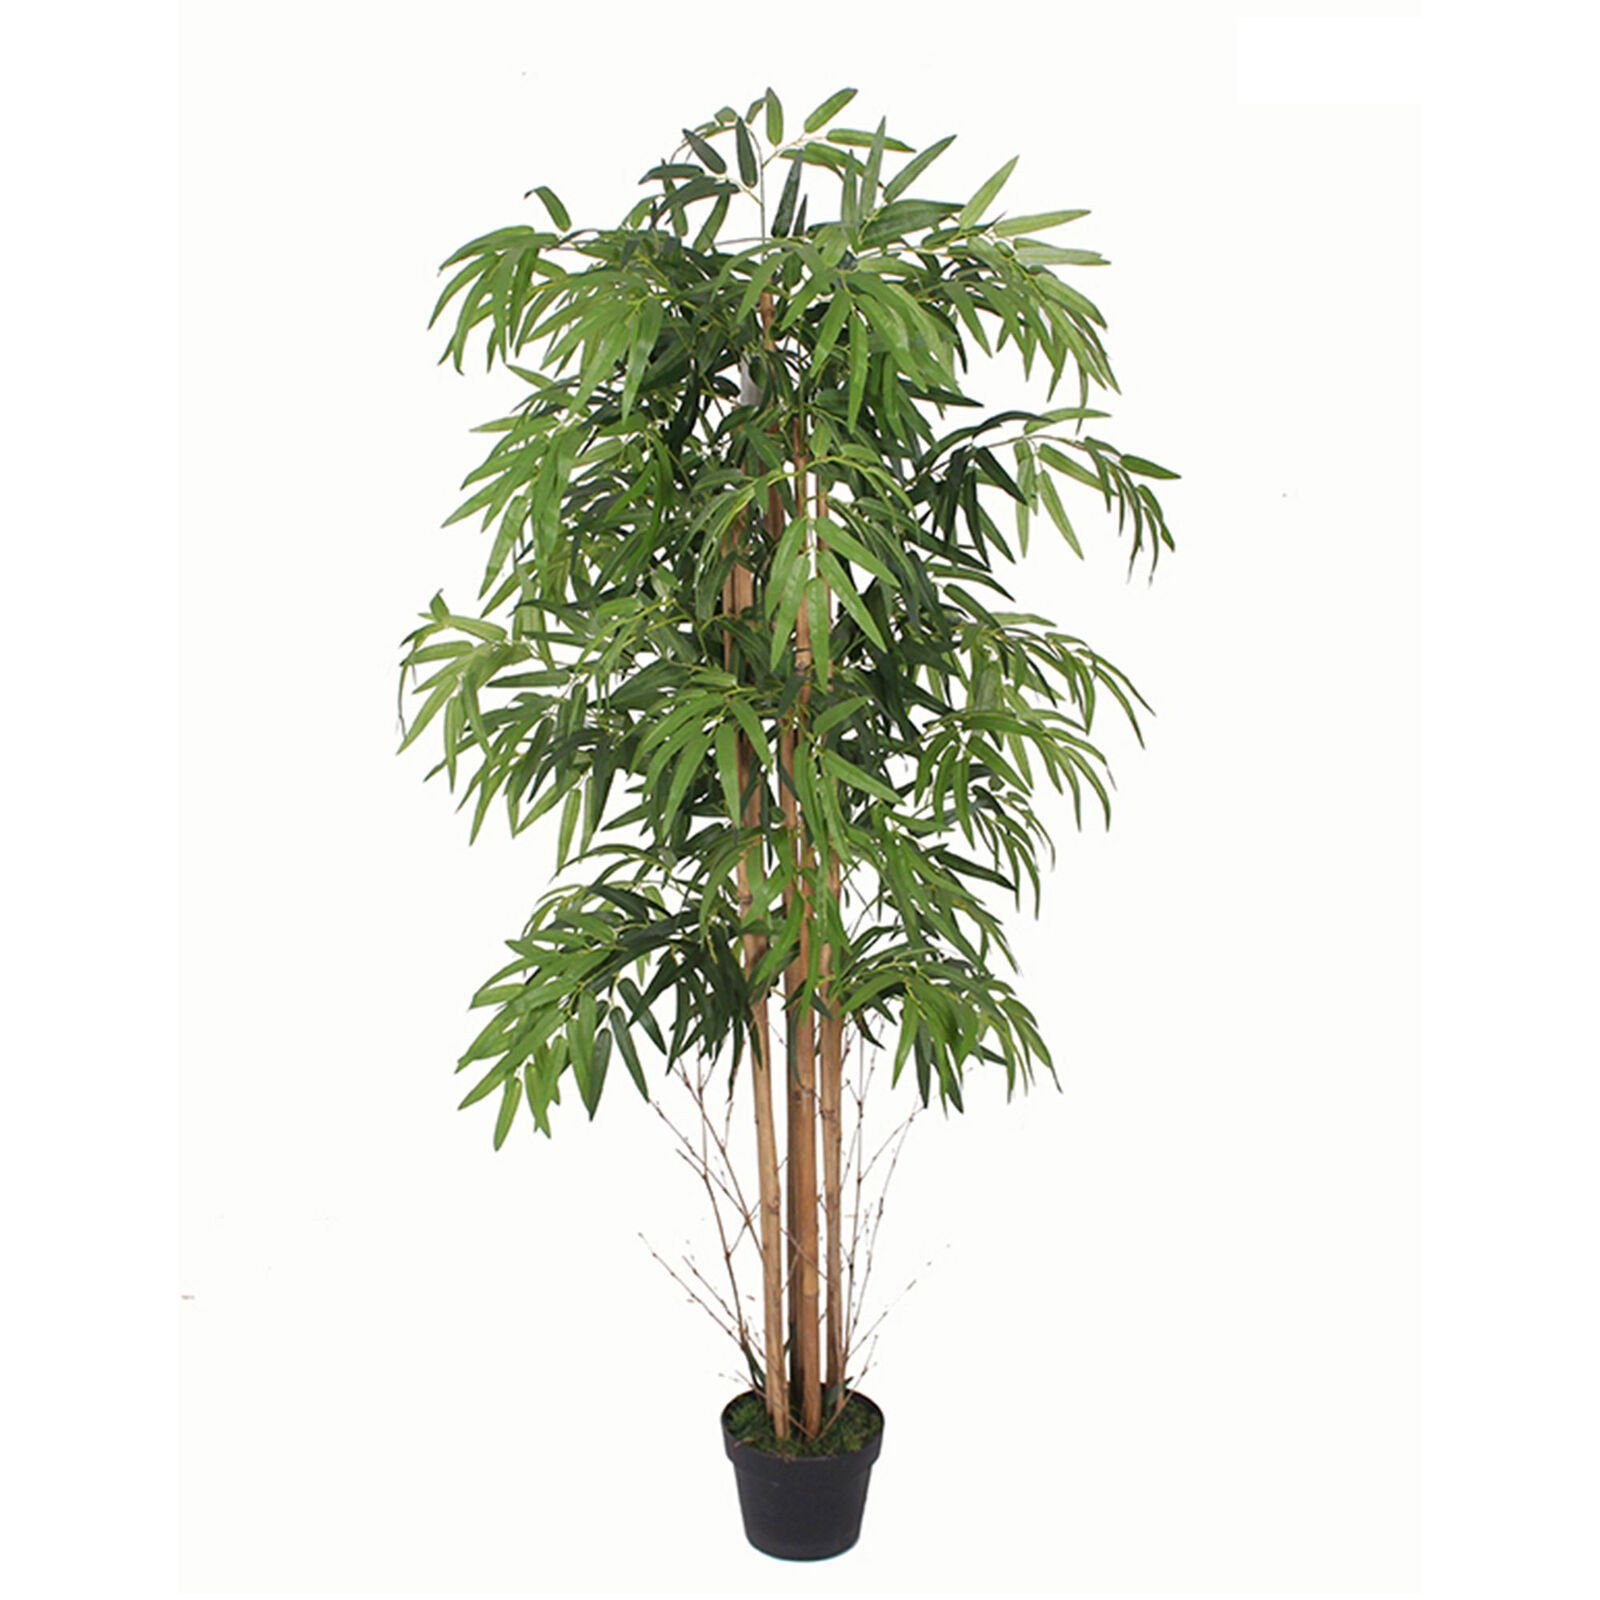 Super günstig im Laden Kunstpalme XL Kunstpflanze 1095 Bambuspflanze Blätter 150cm Kunstbaum Mojawo Bambus Zimmerpflanze